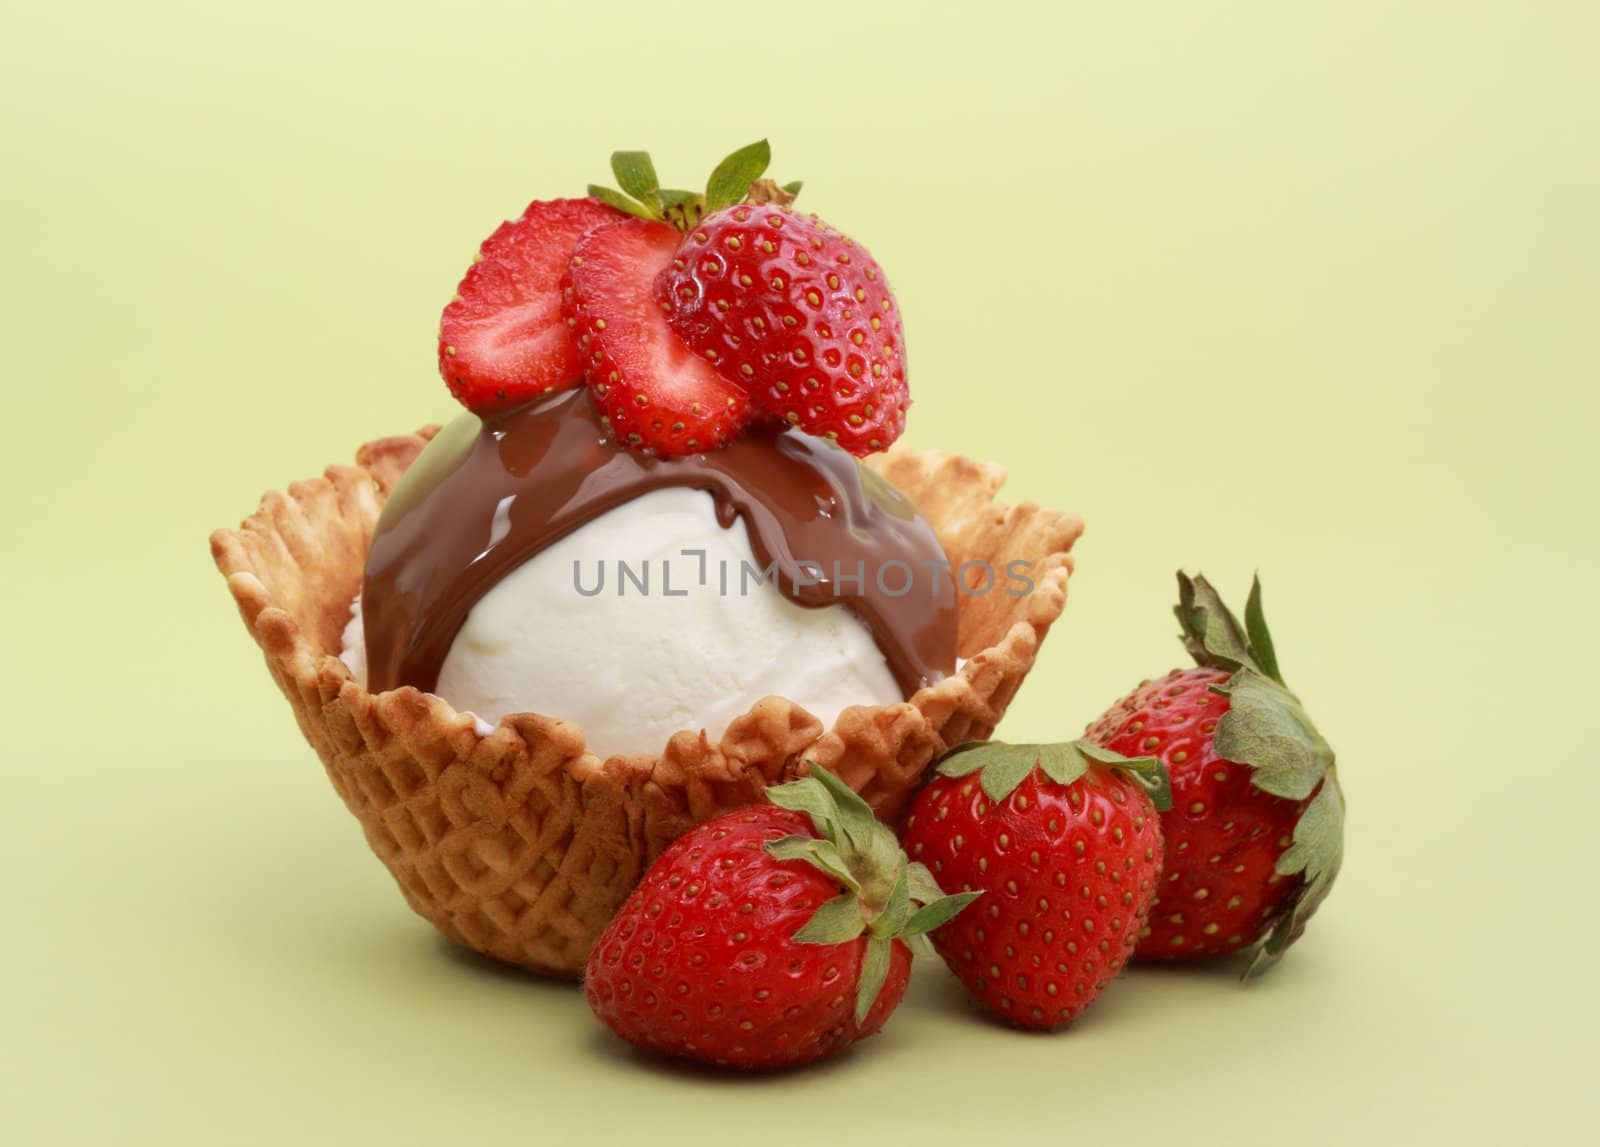 ice cream dessert with strawberries and chocolate